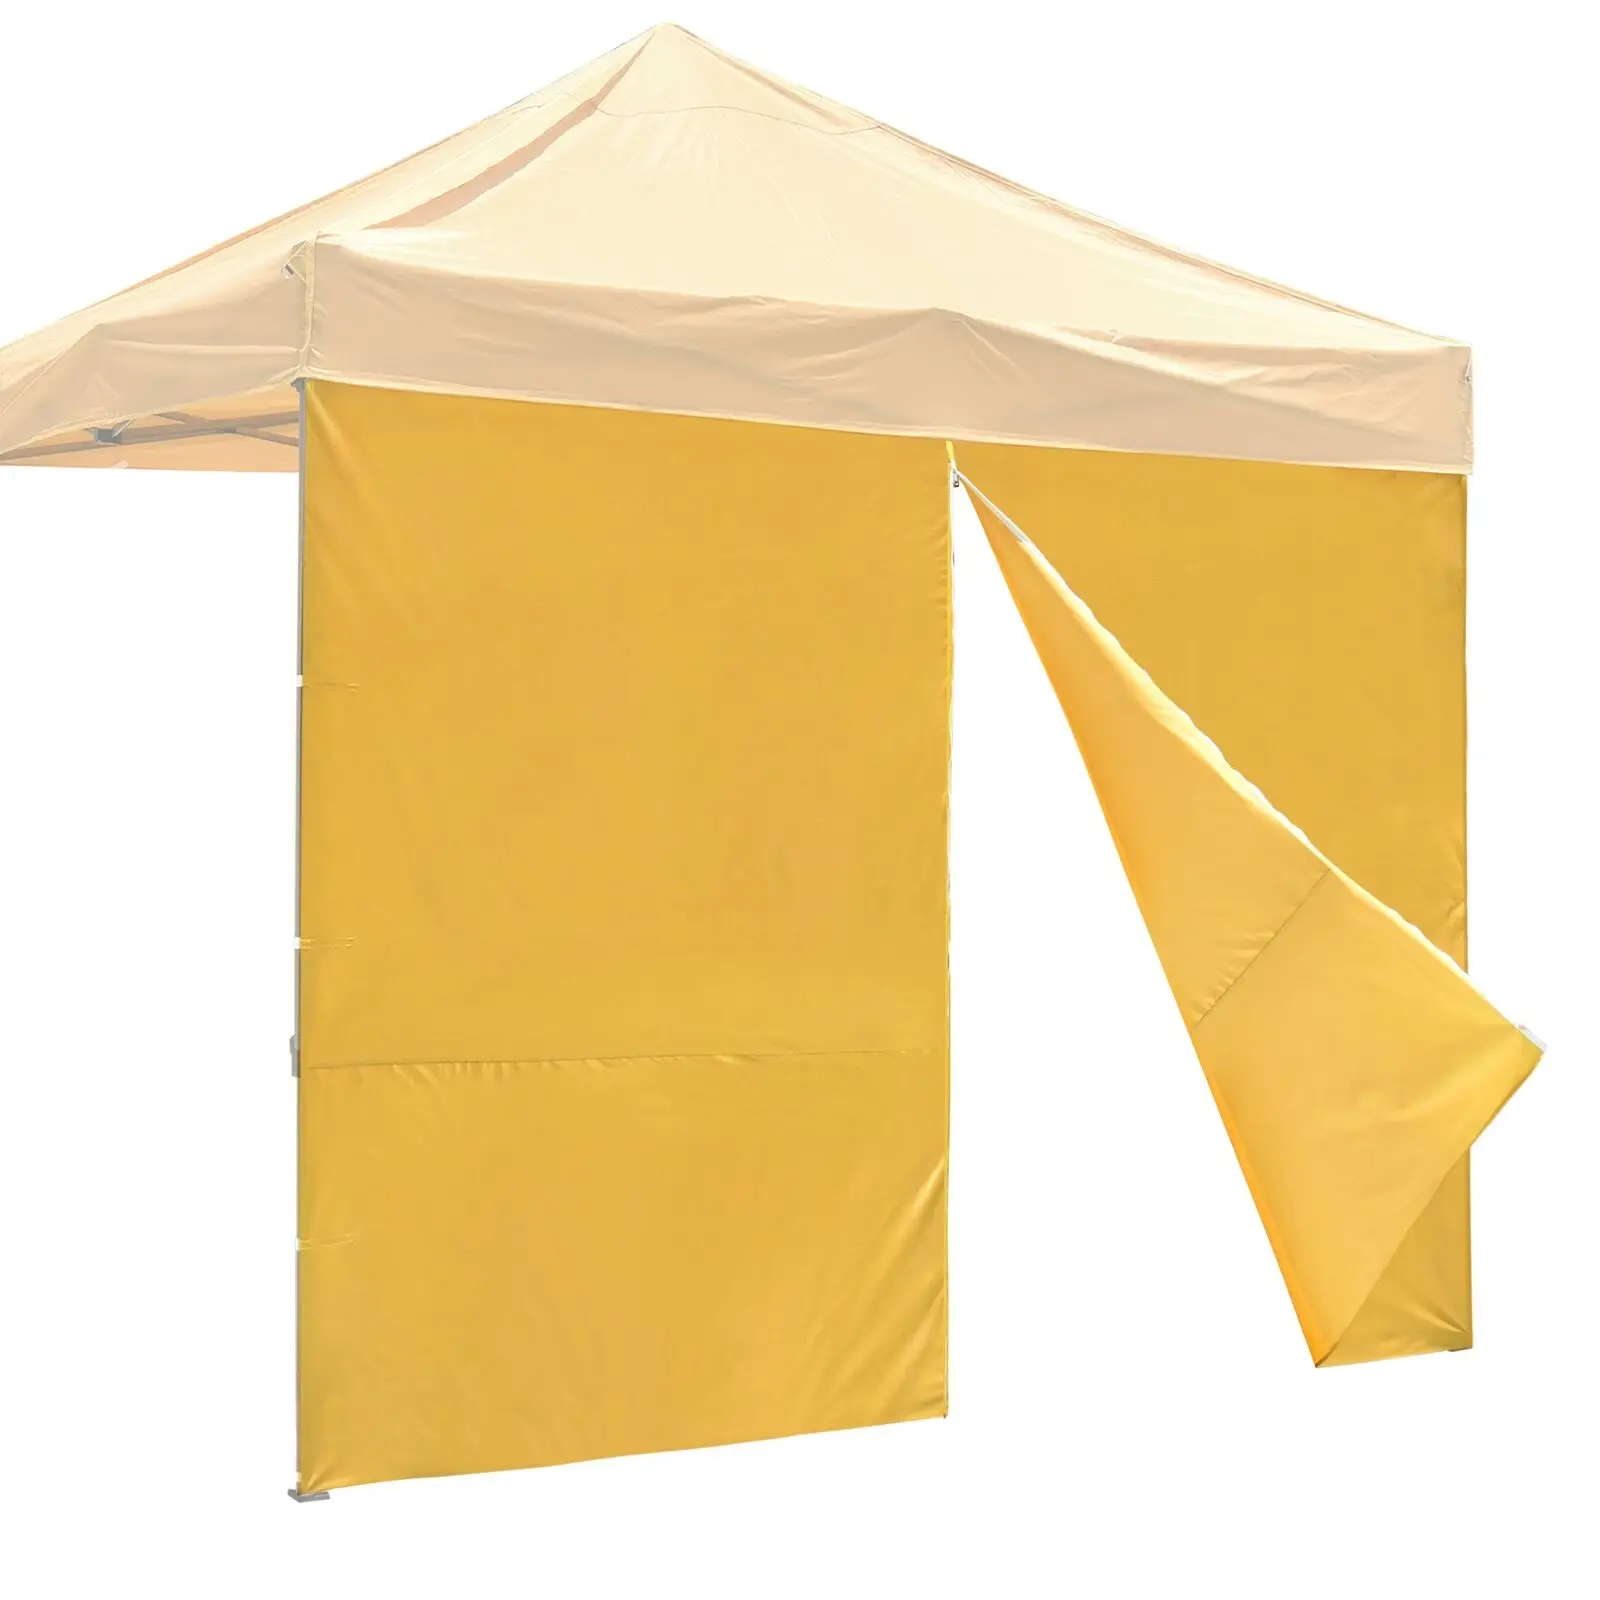 10x7 Ft UV30+ Protection Canopy Gazebo Zipper Full Size Side Wall/Yellow